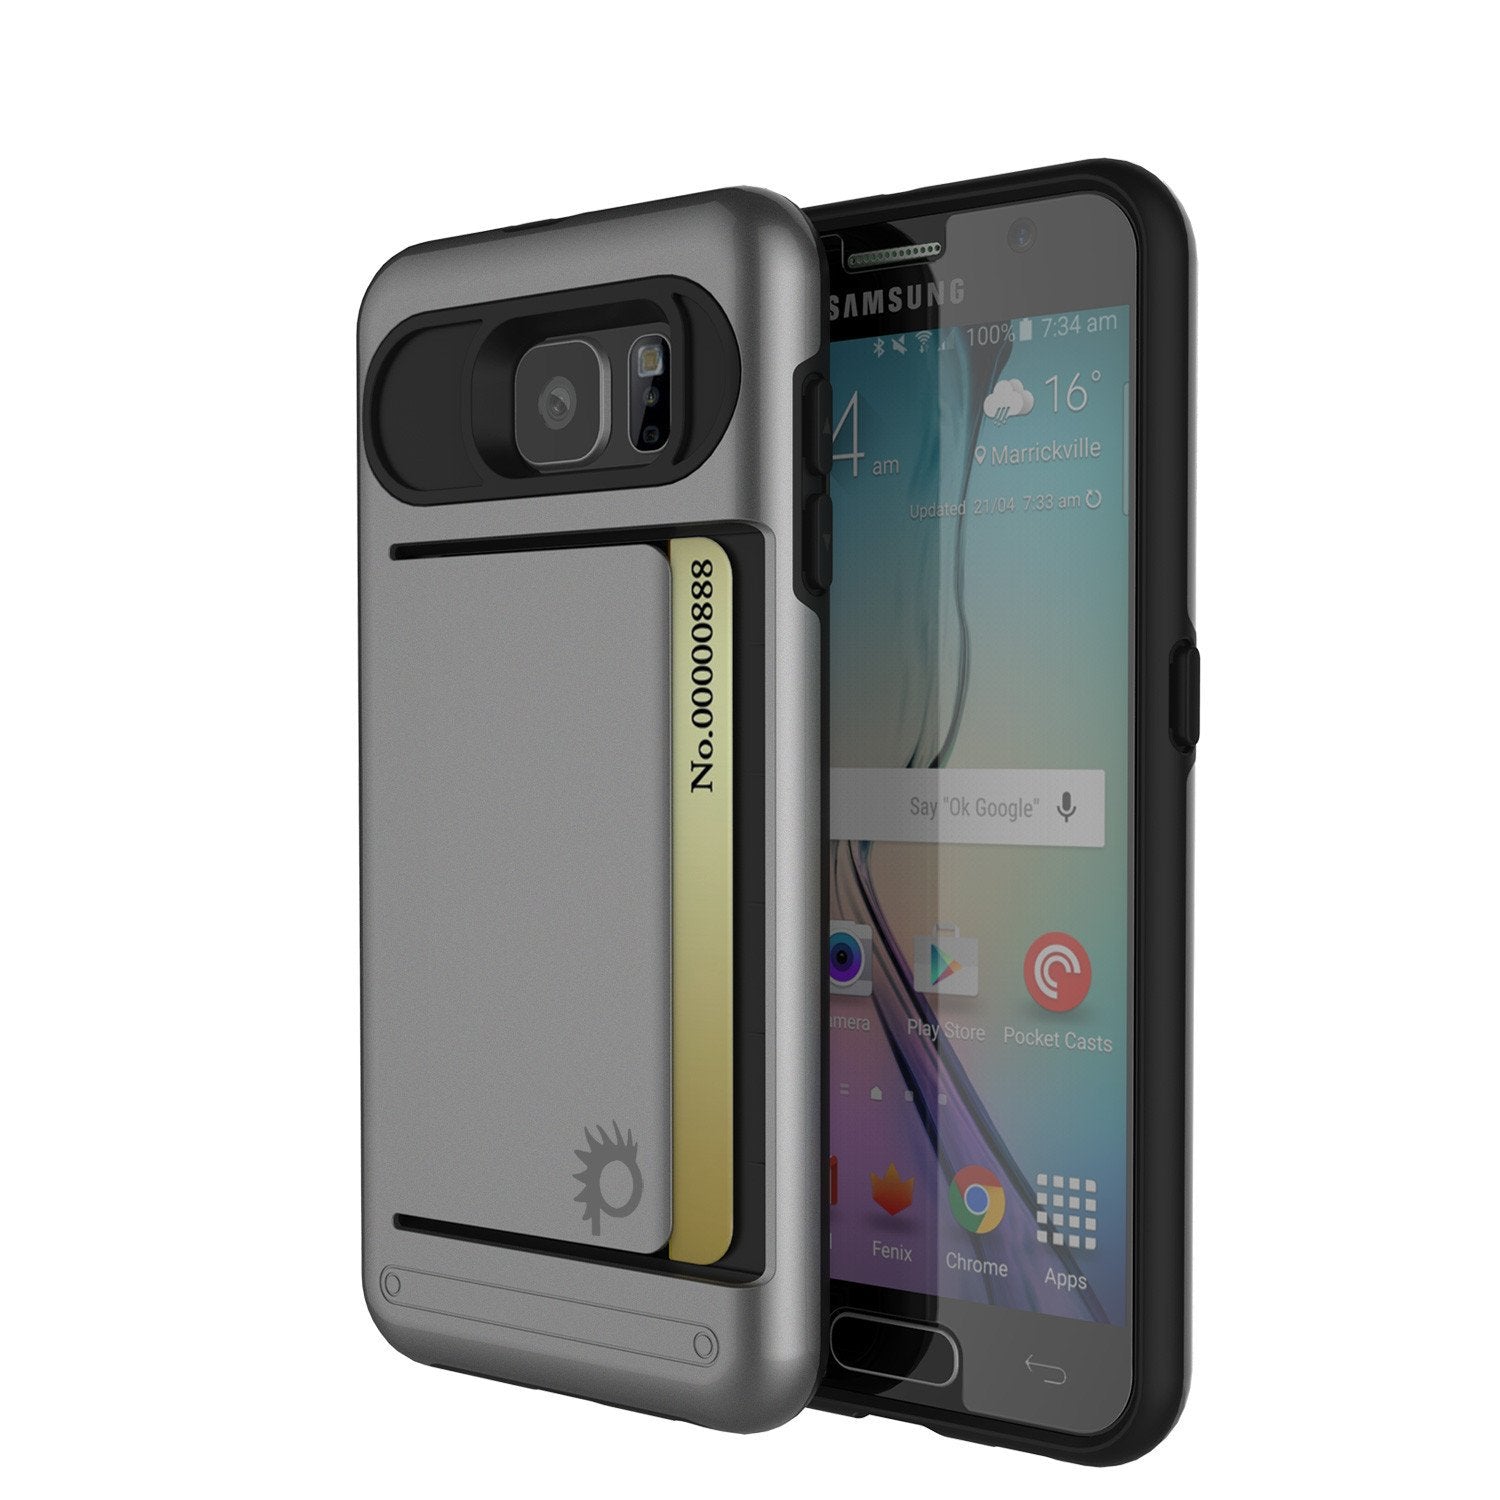 Galaxy S6 EDGE Plus Case PunkCase CLUTCH Grey Series Slim Armor Soft Cover Case w/ Screen Protector